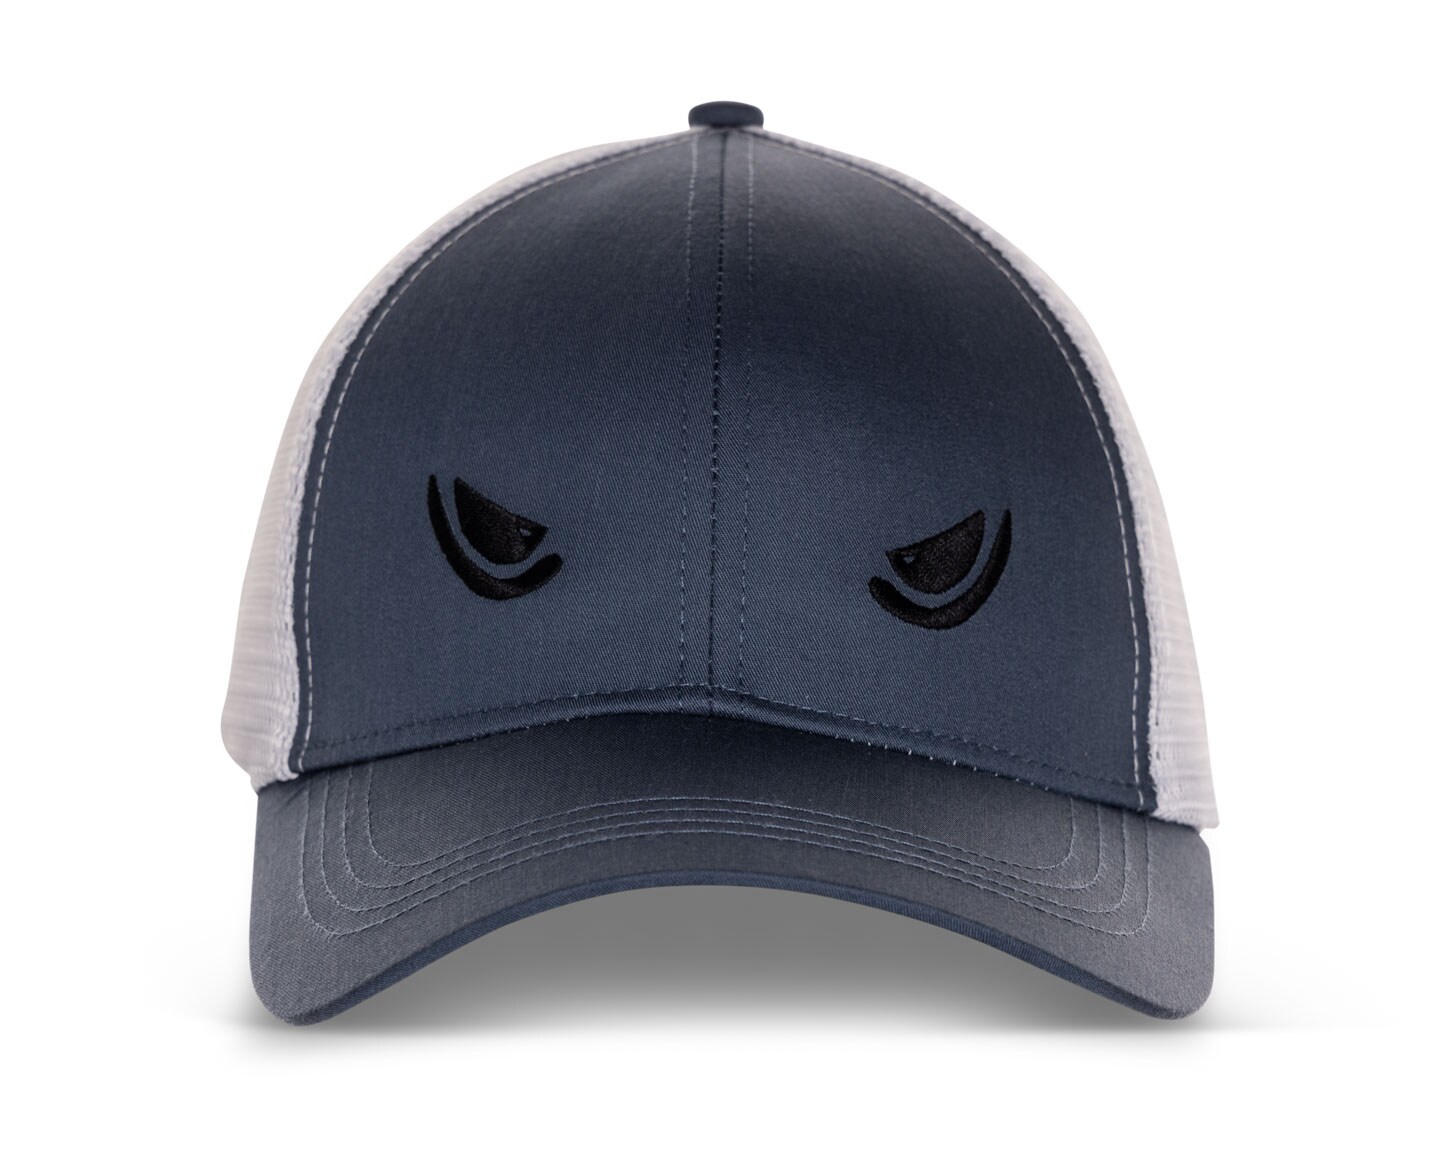 department Men\'s Baseball Hats Cotton the Sea Bering Pelican in Cap at Mad